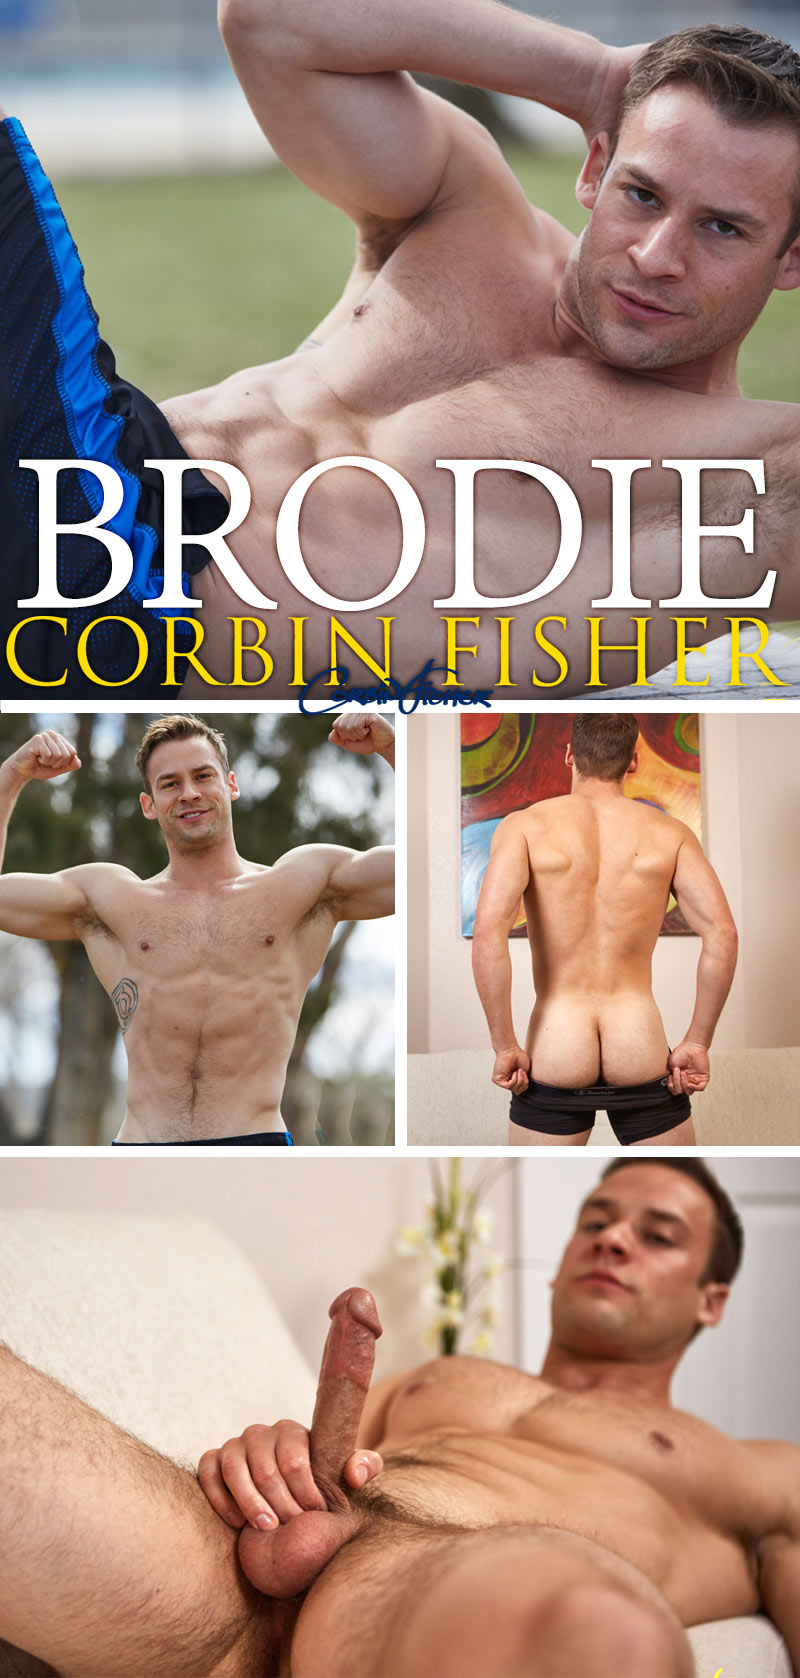 Brodie at CorbinFisher